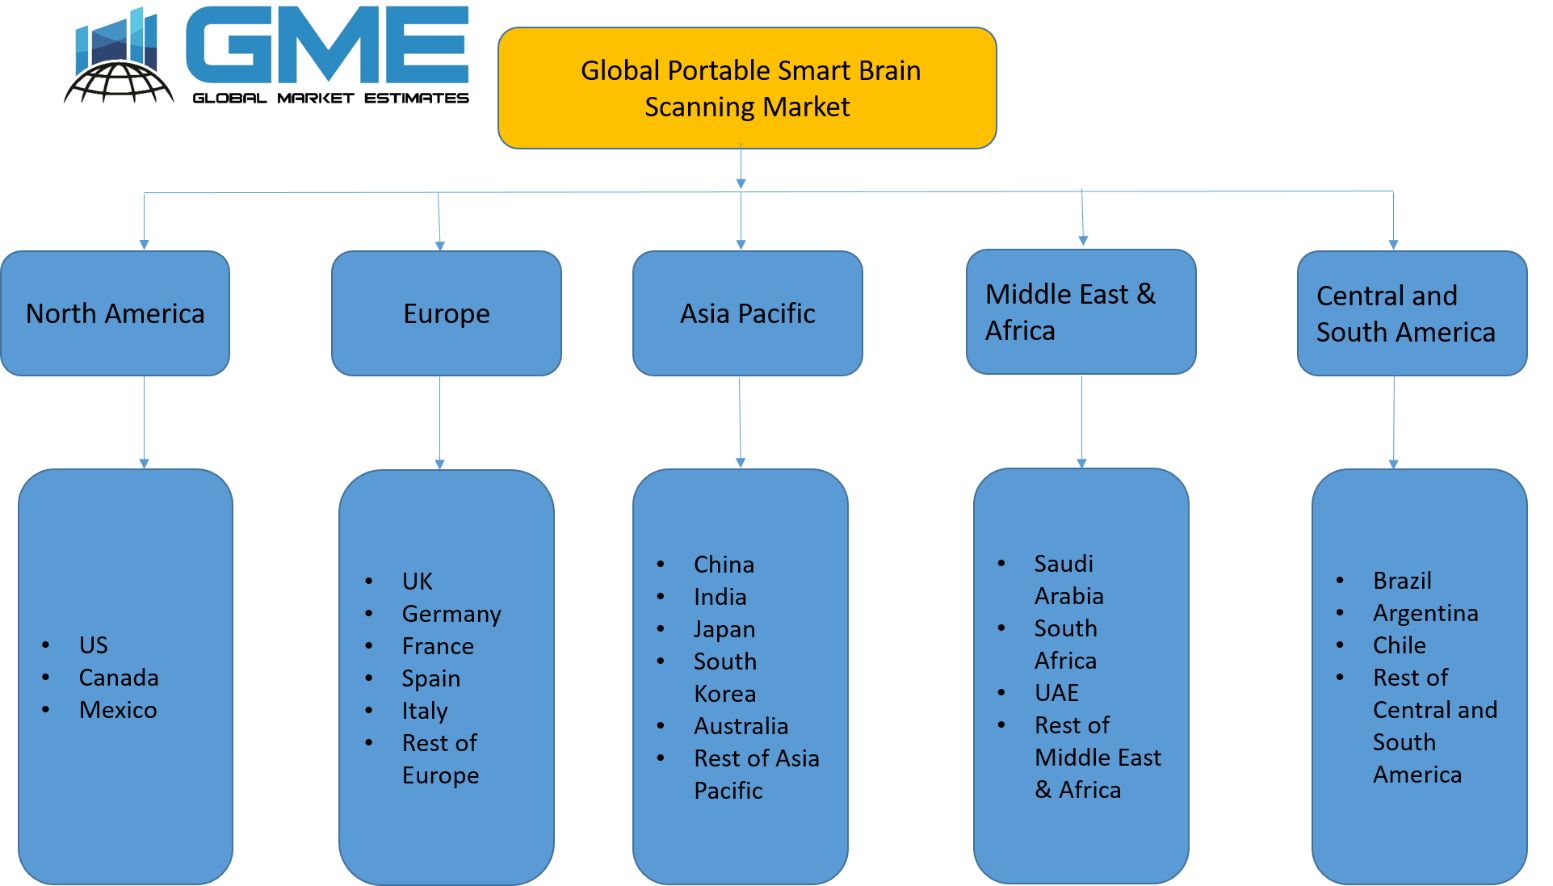 Global Portable Smart Brain Scanning Market - Regional Analysis